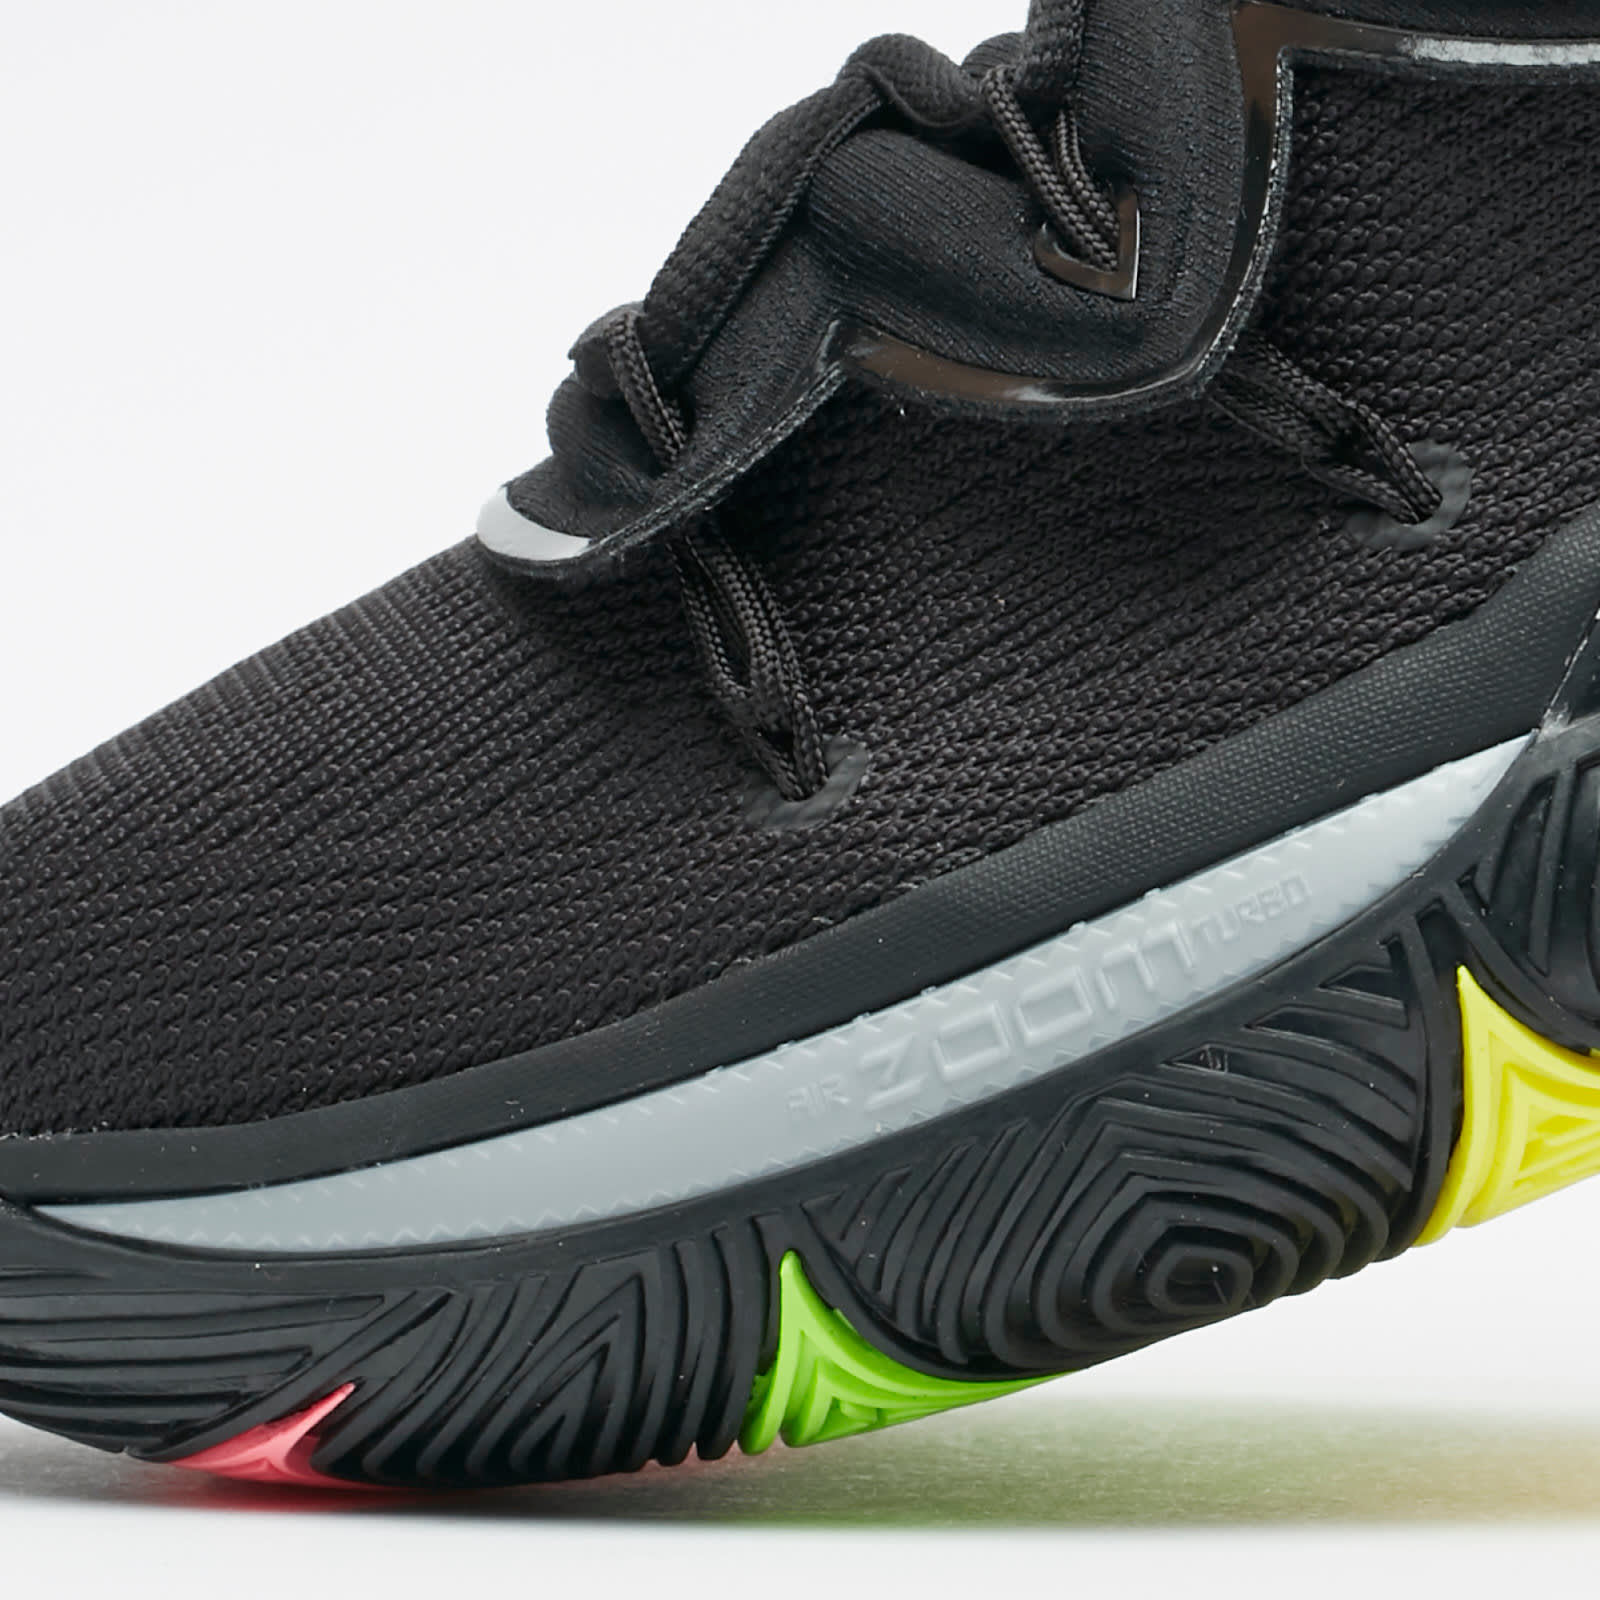 Nike Kyrie 5 Black Rainbow Release Date AO2918-001 Midsole